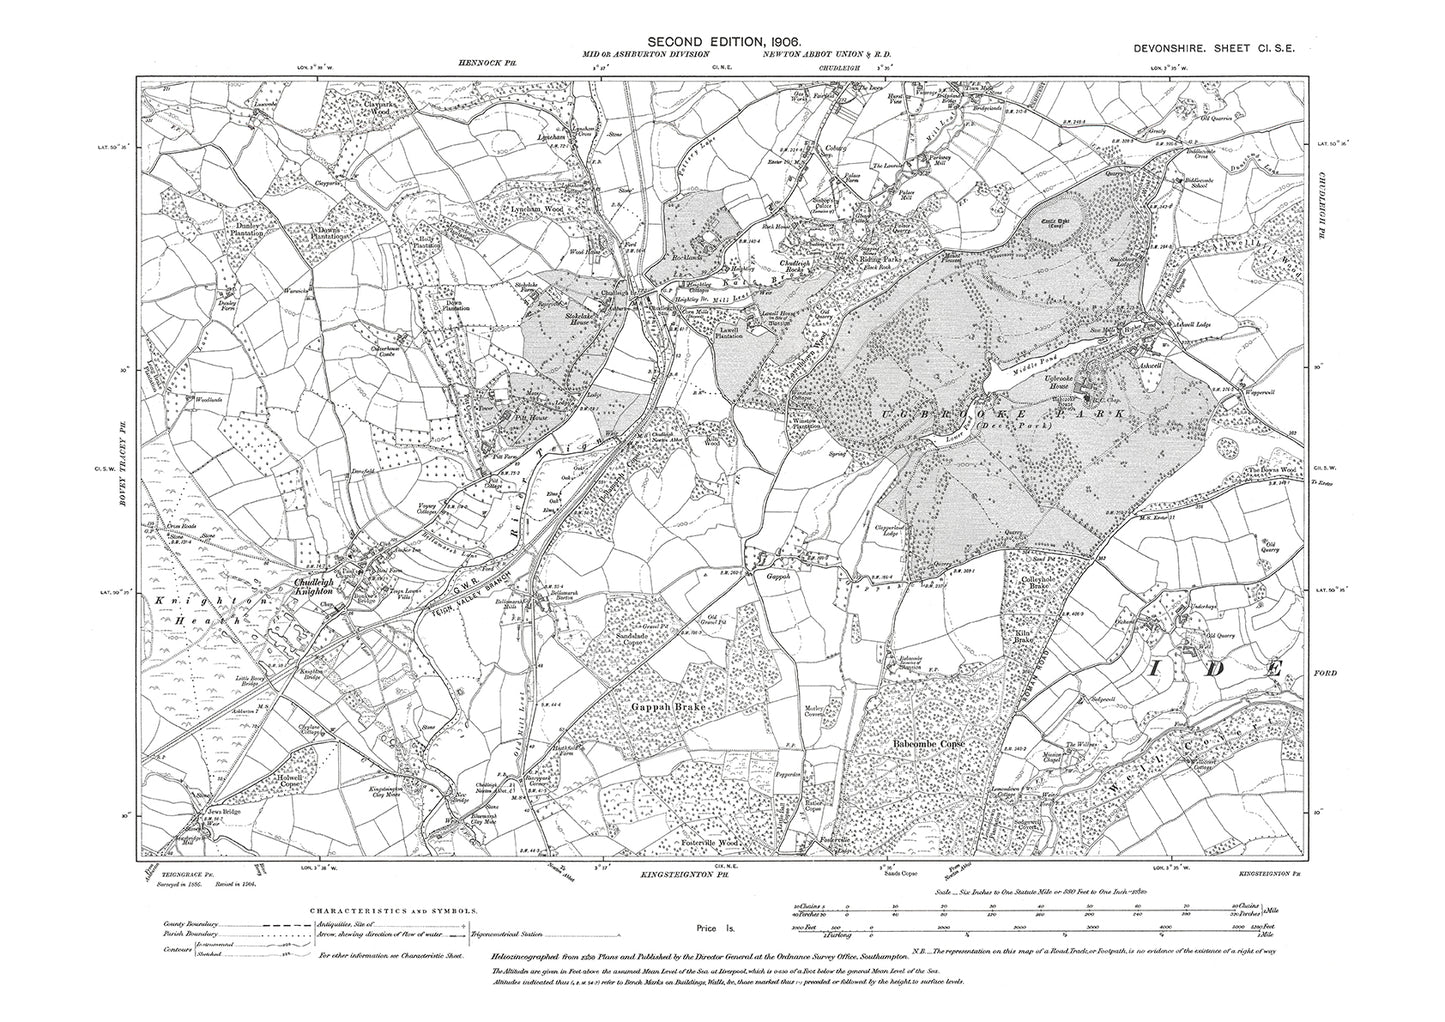 Chudleigh (south), Chudleigh Knighton, Old Map Devon 1906: 101SE